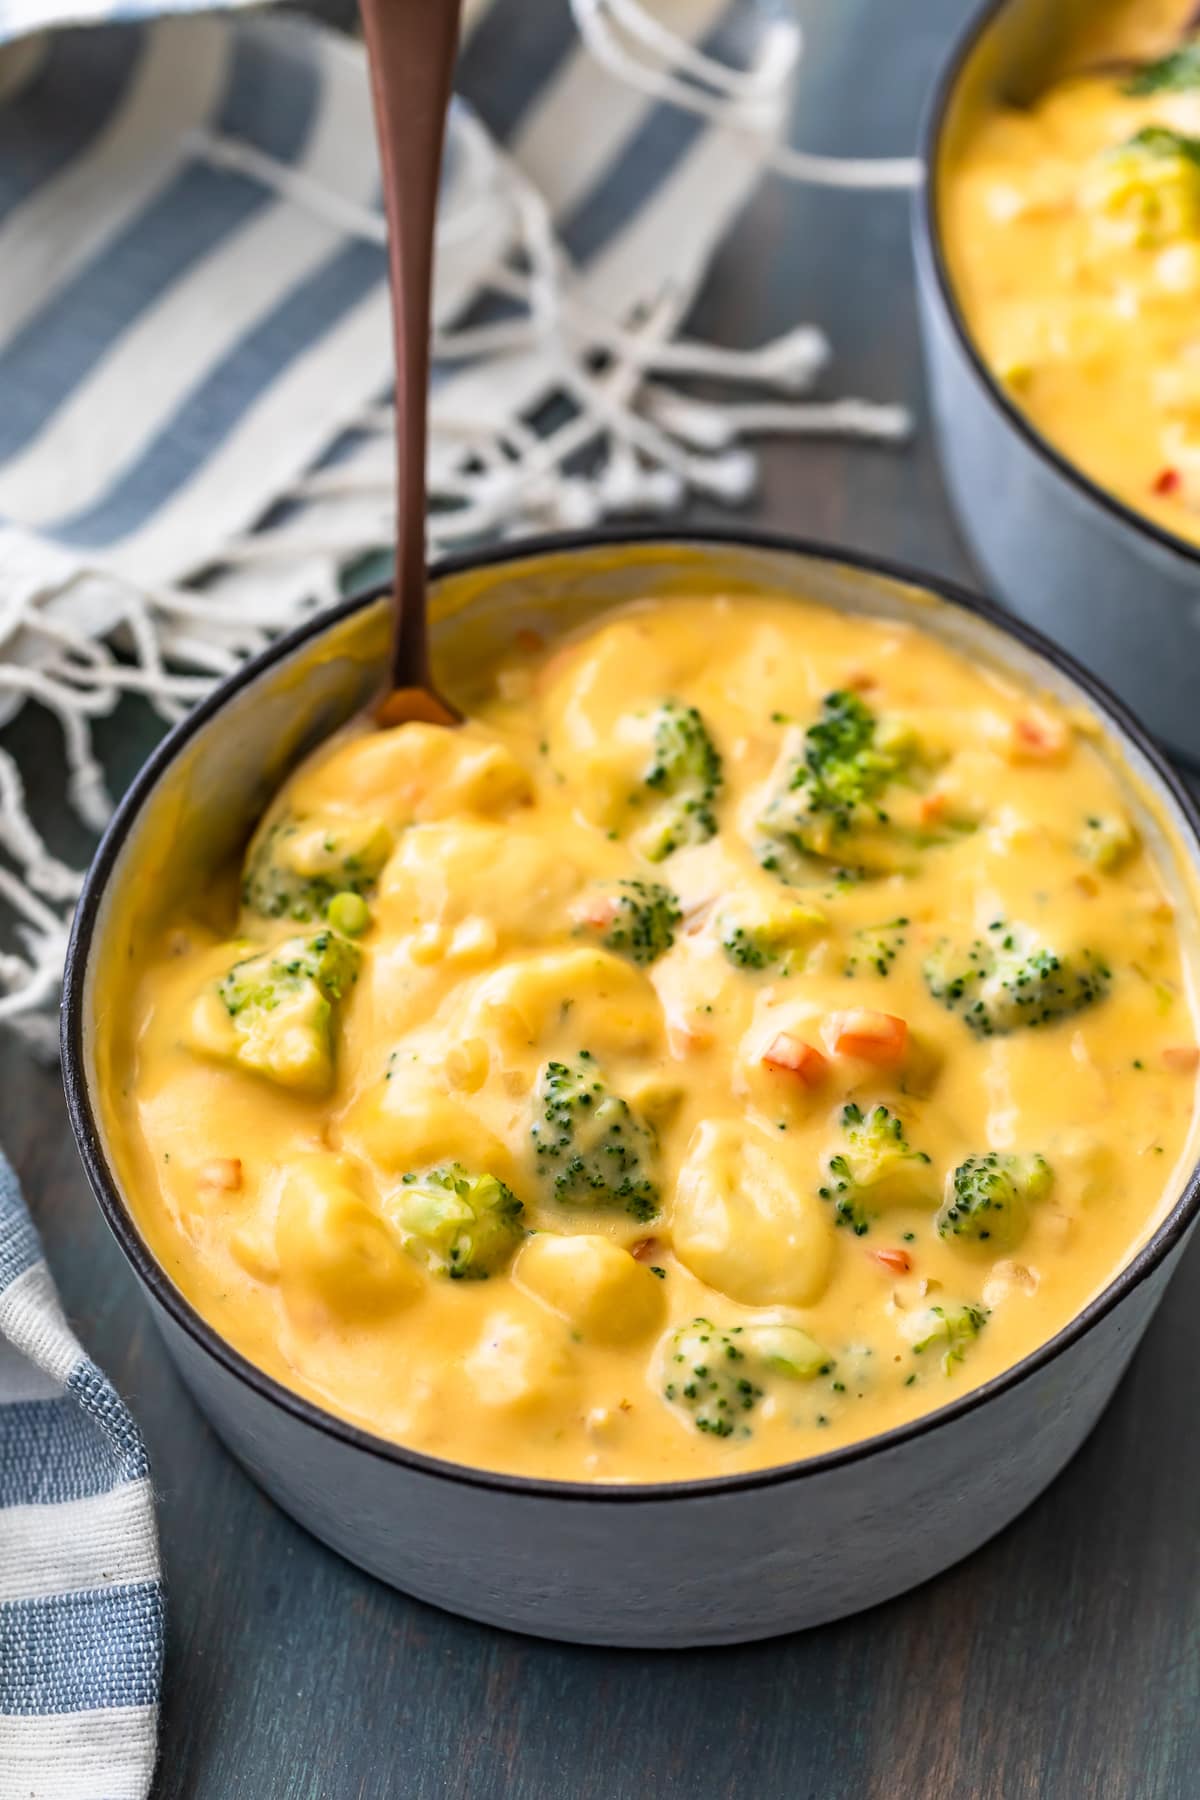 a bowl of broccoli cheddar soup with gnocchi